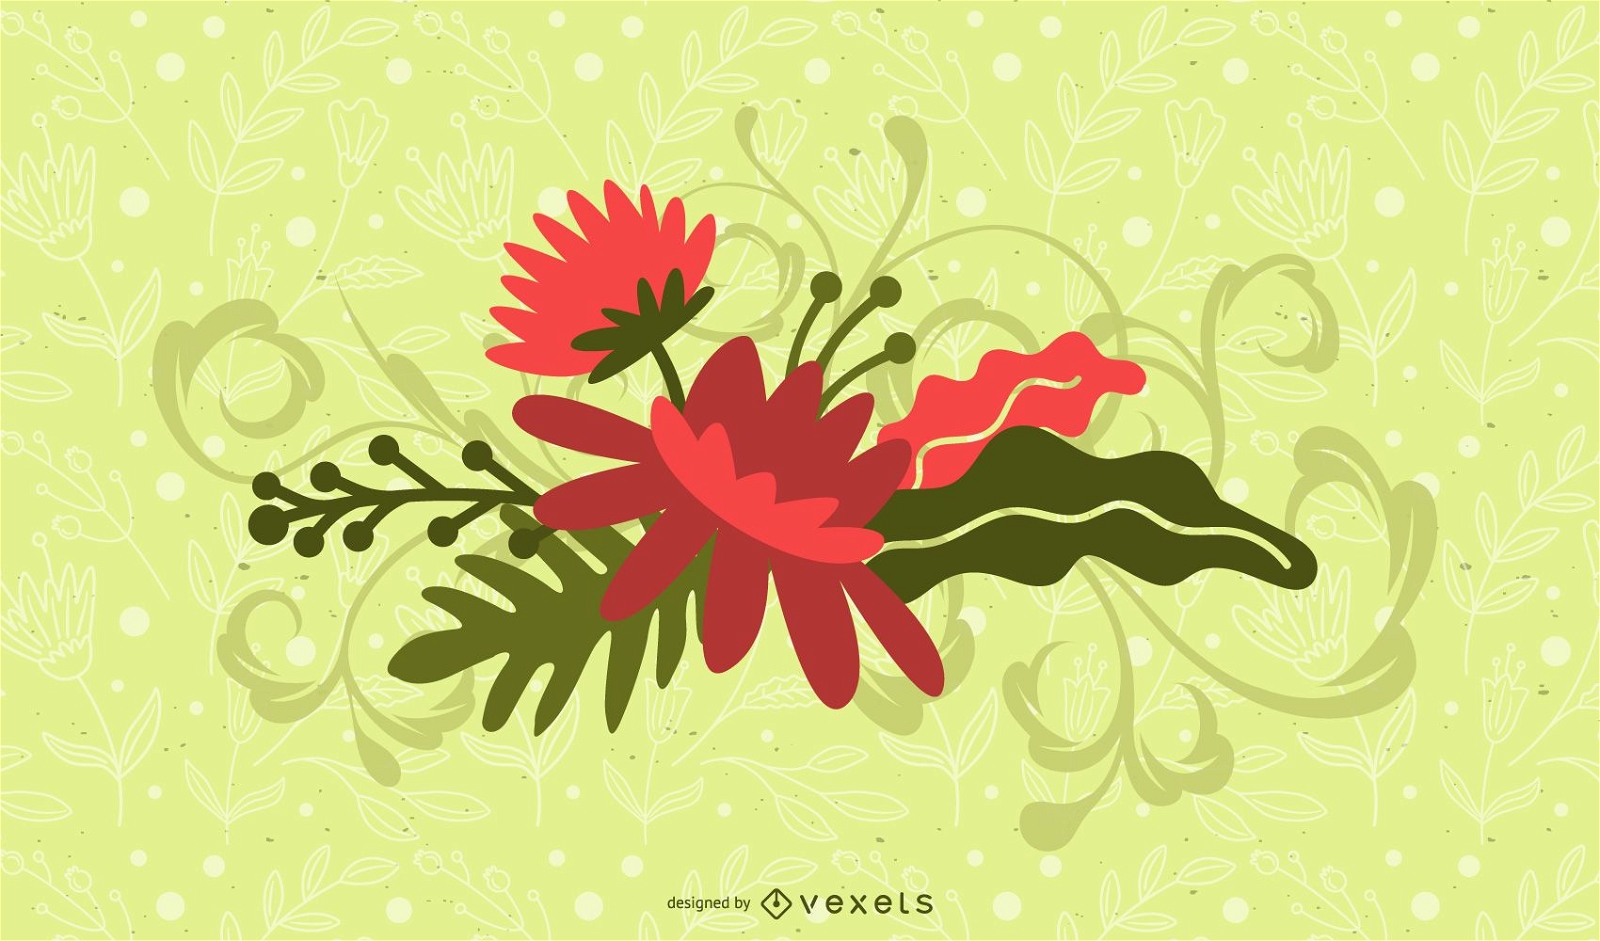 Gr?ne und rote Blumenvektorillustration